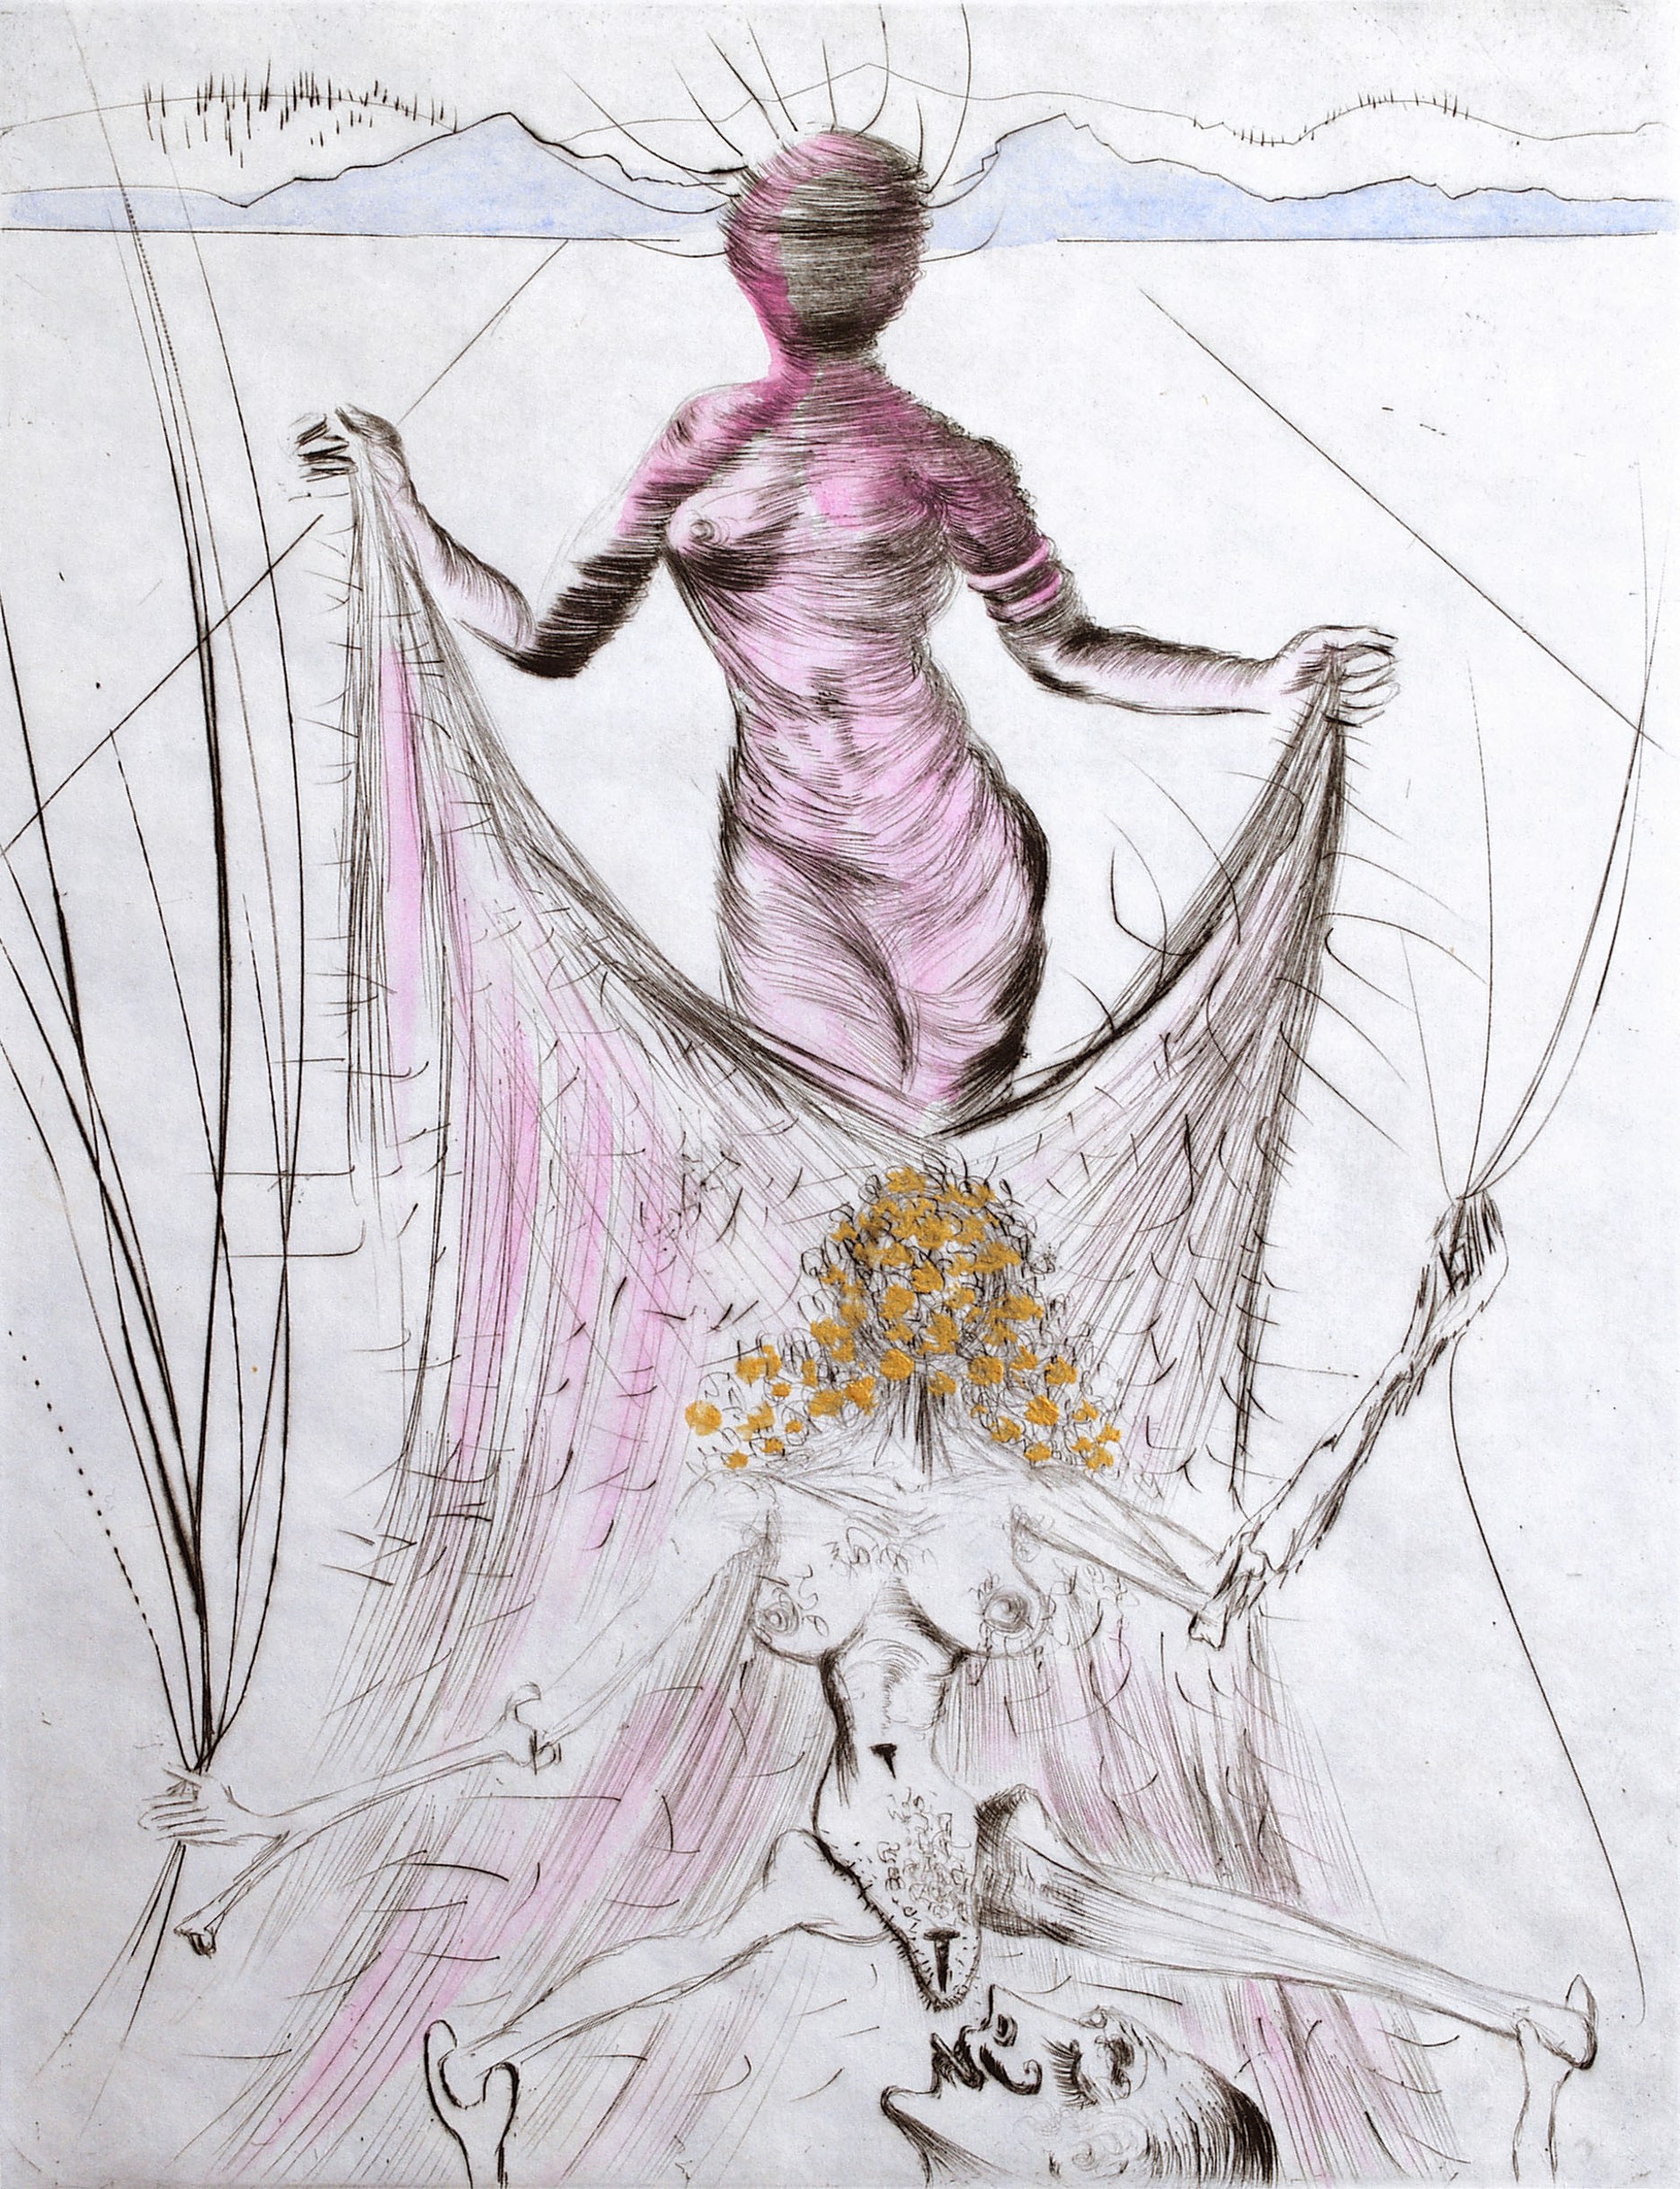 Venus in Furs "Woman Holding Veil" by Salvador Dali